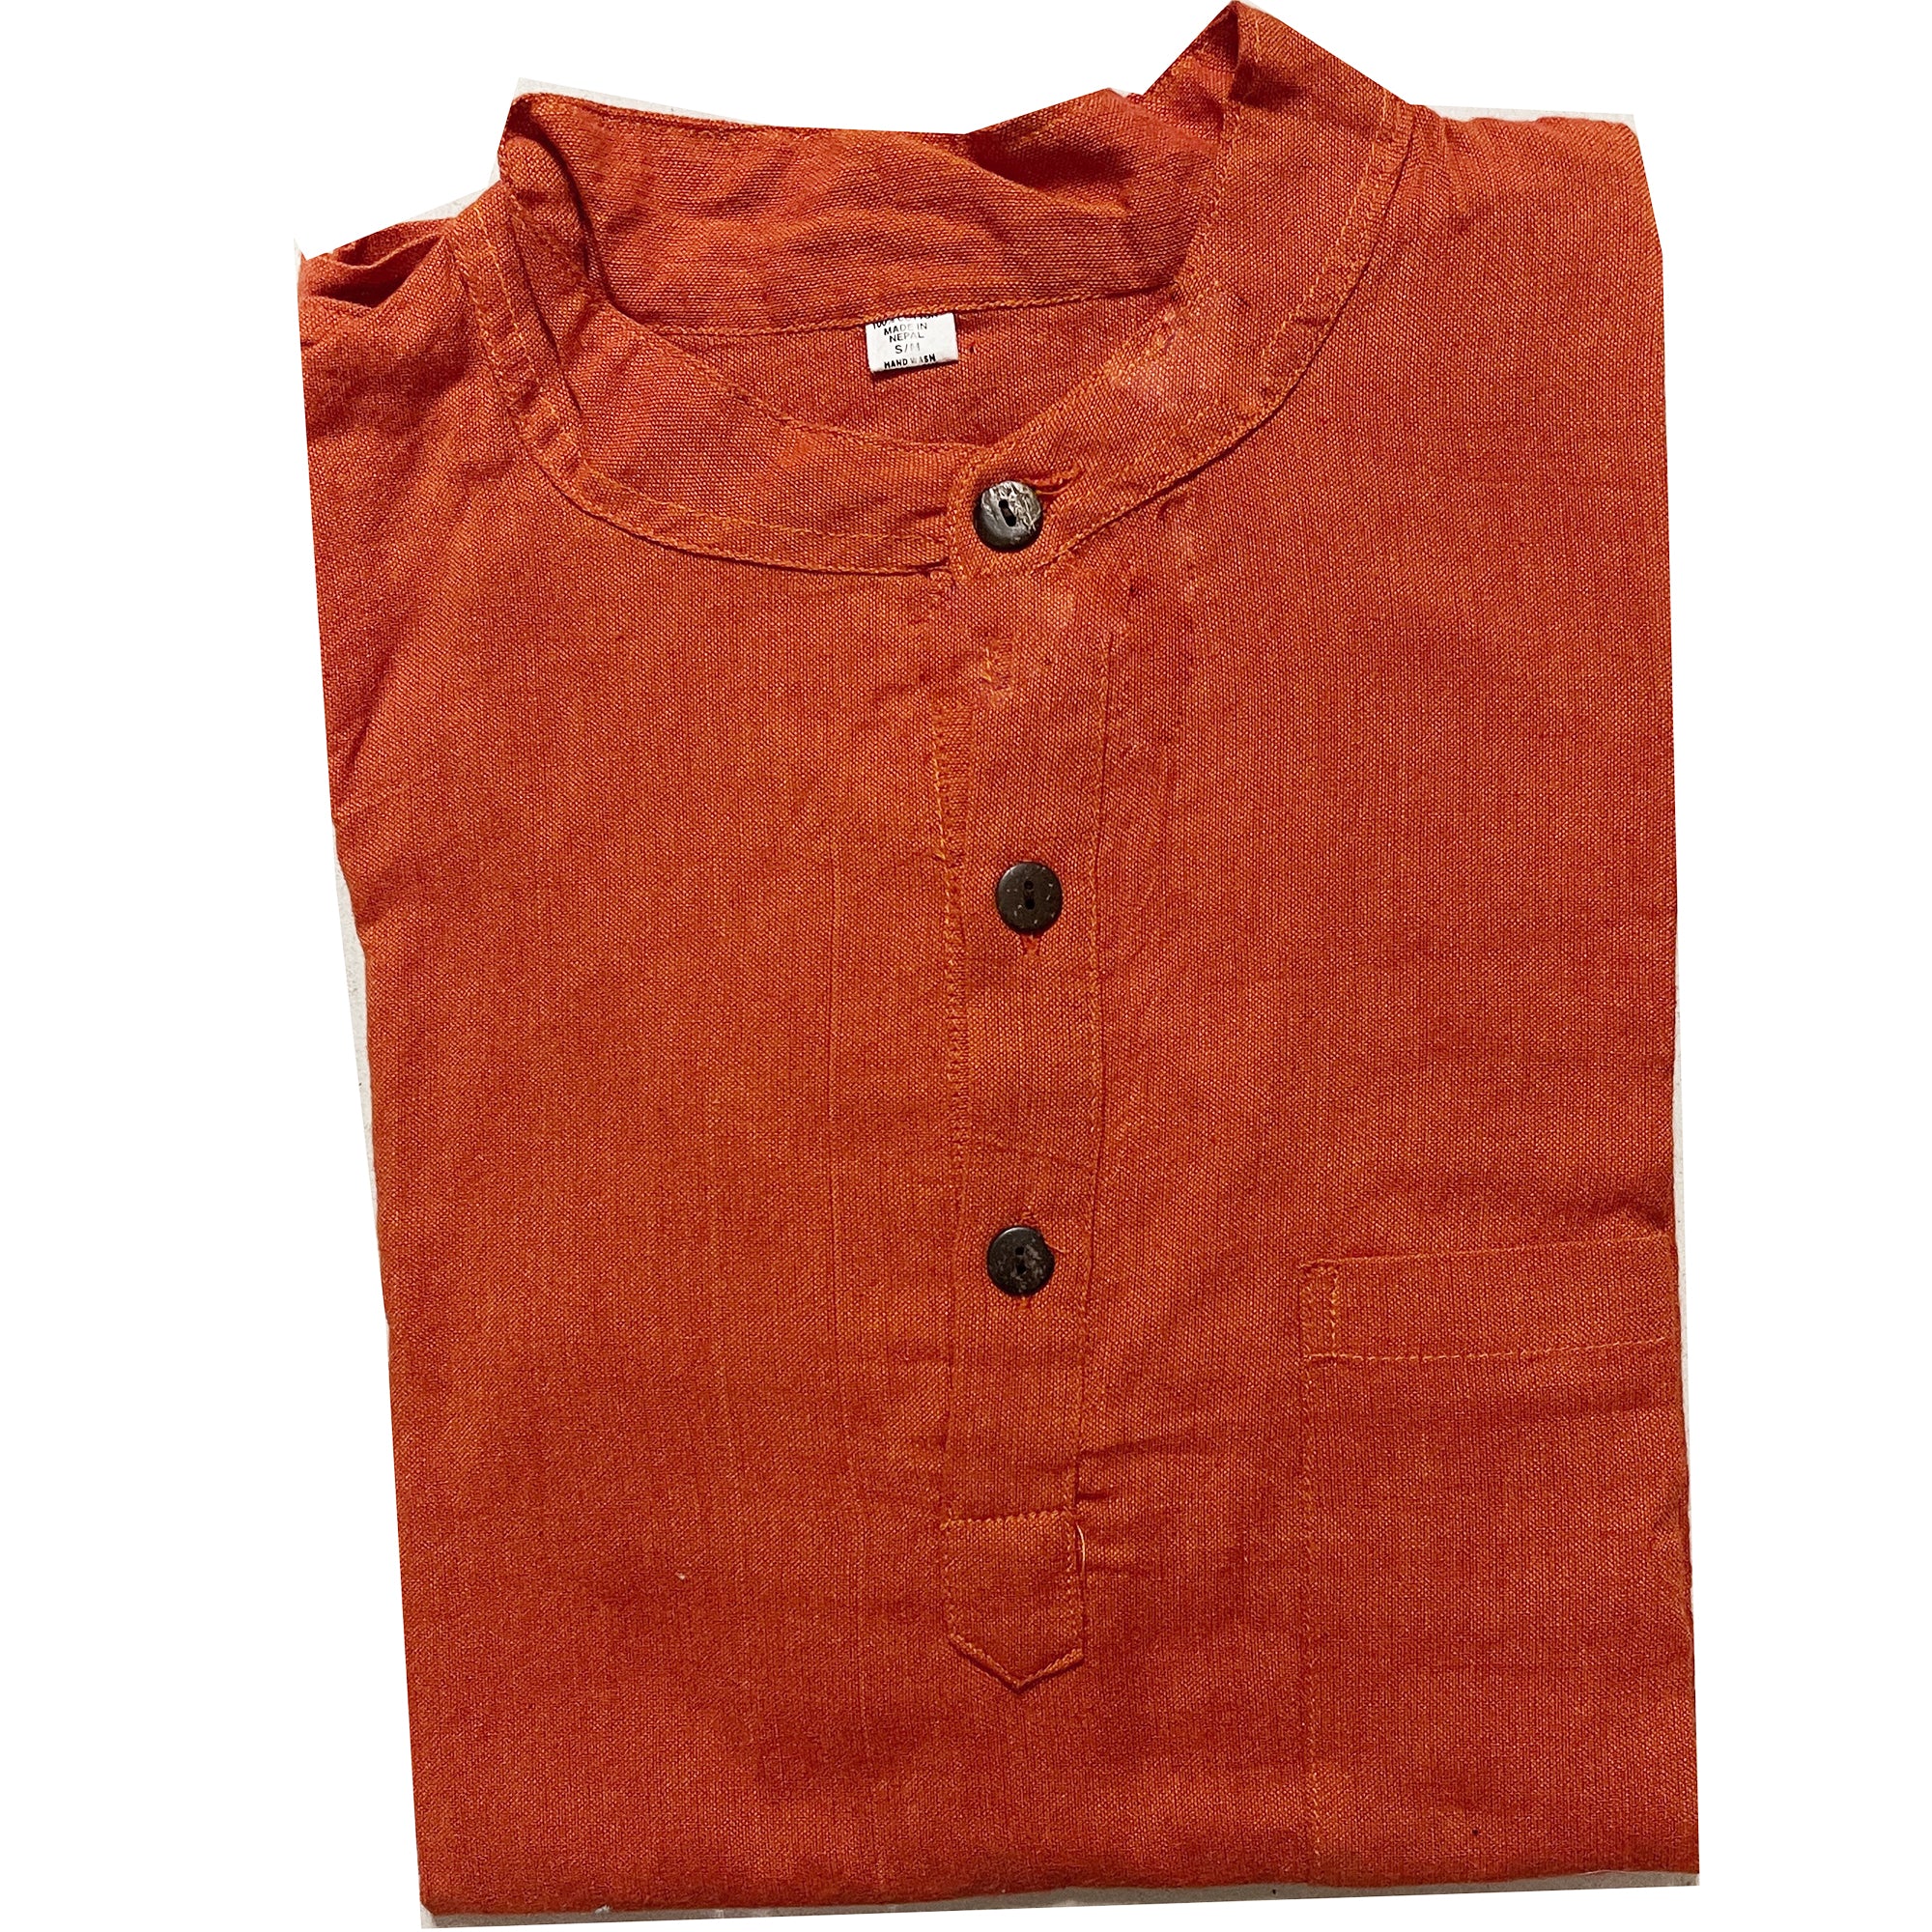 Thin Nepali cotton shirt-10 Colors - Vintage India NYC